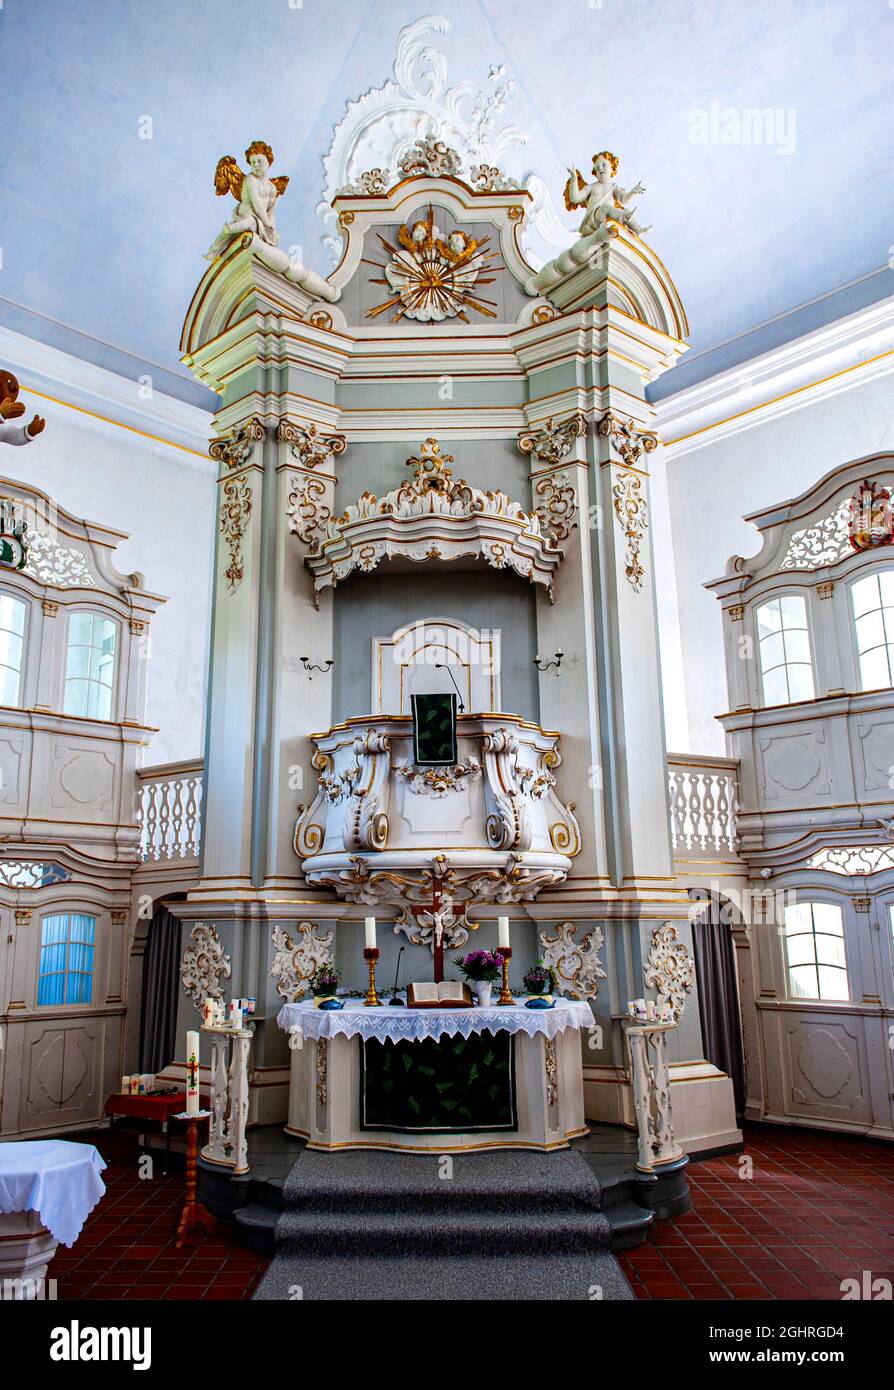 Altar in the church St. Petri zu Osten, Osten-Hemmoor, Cuxland, Lower Saxony, Germany Stock Photo